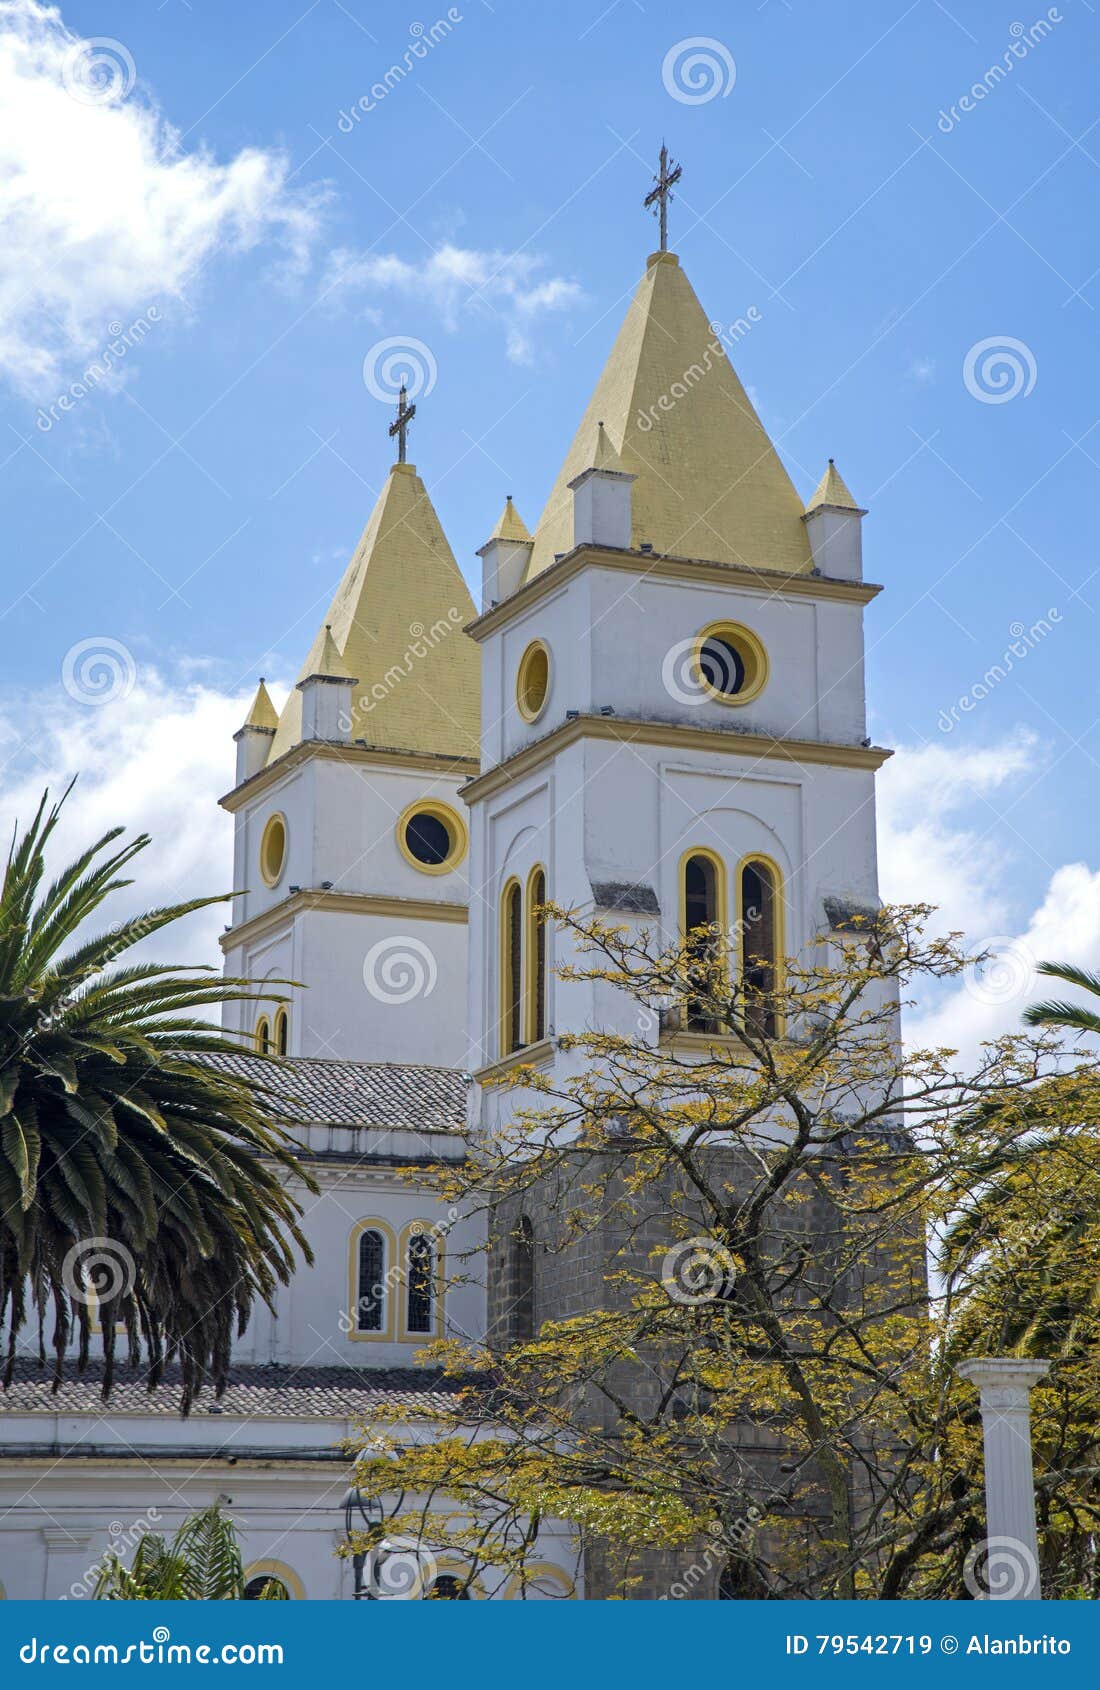 guaranda cathedral steeples